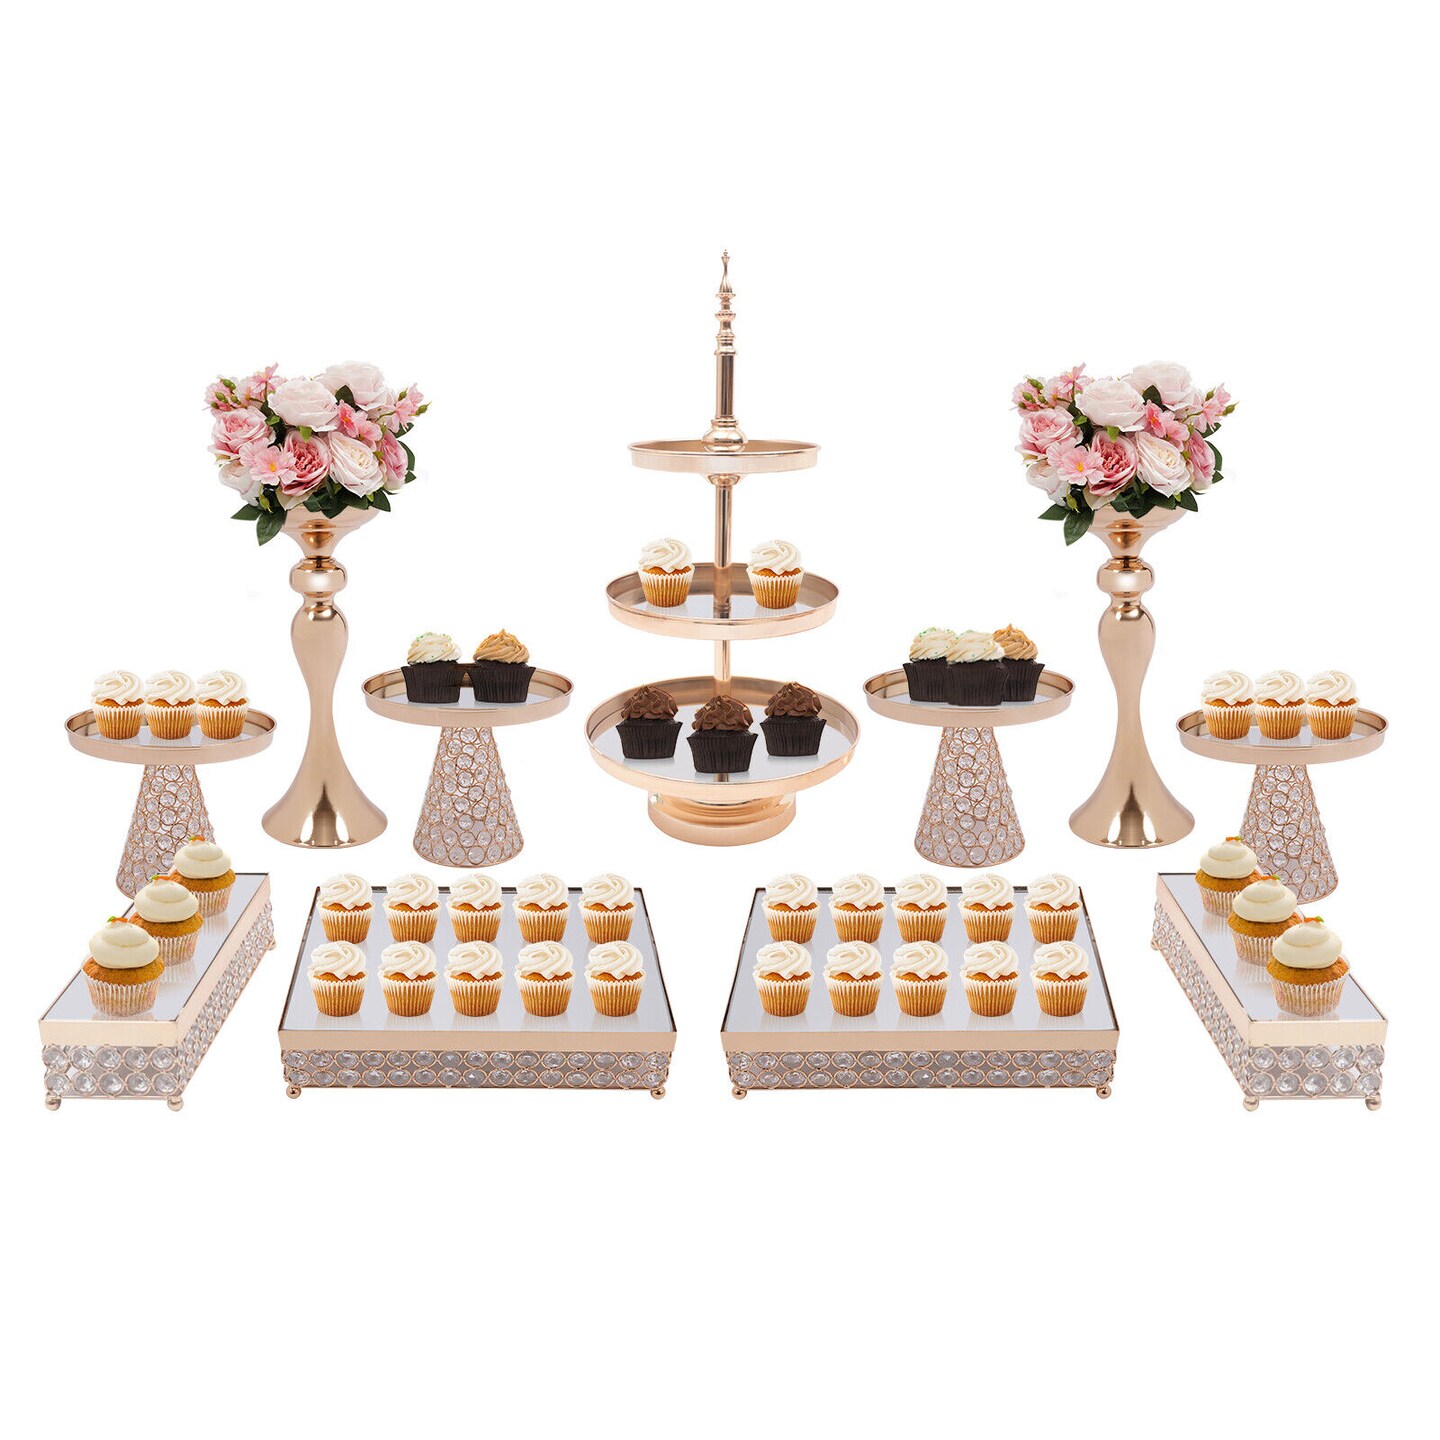 11 Pcs, Cake Stand Dessert Pedestal Display Event Party Elegant Decor.